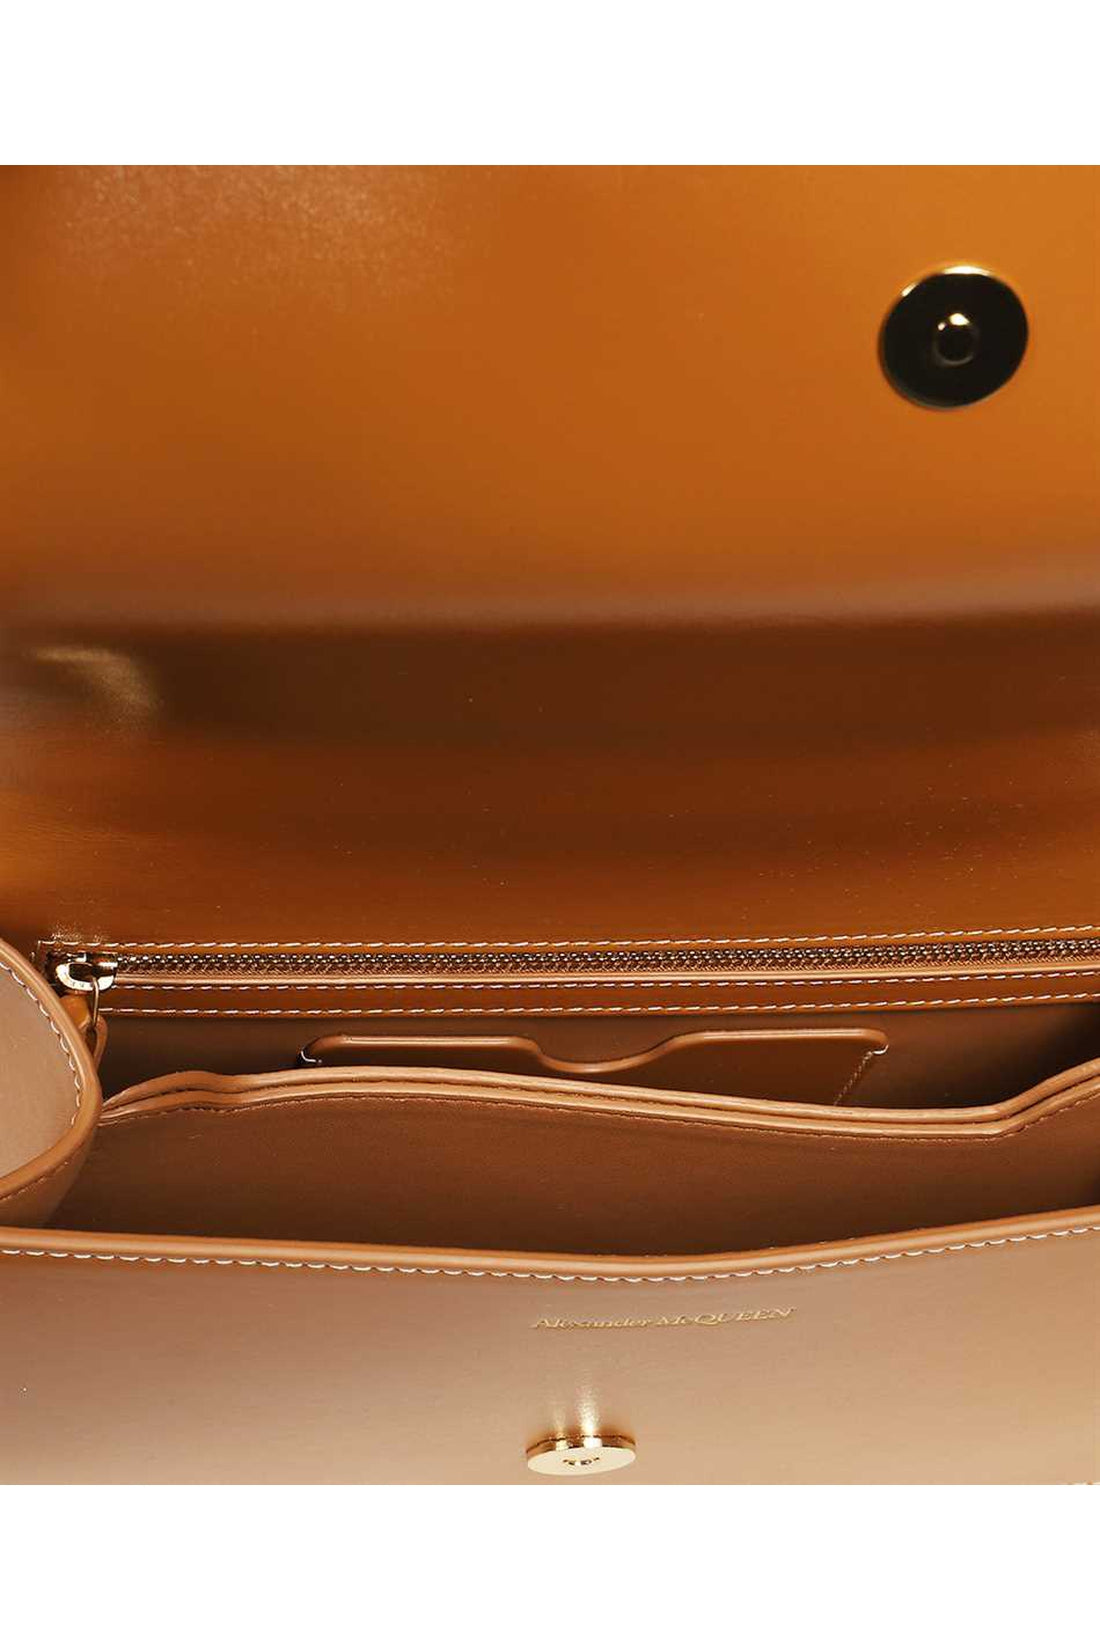 Alexander McQueen-OUTLET-SALE-Jewelled Satchel raffia bag-ARCHIVIST